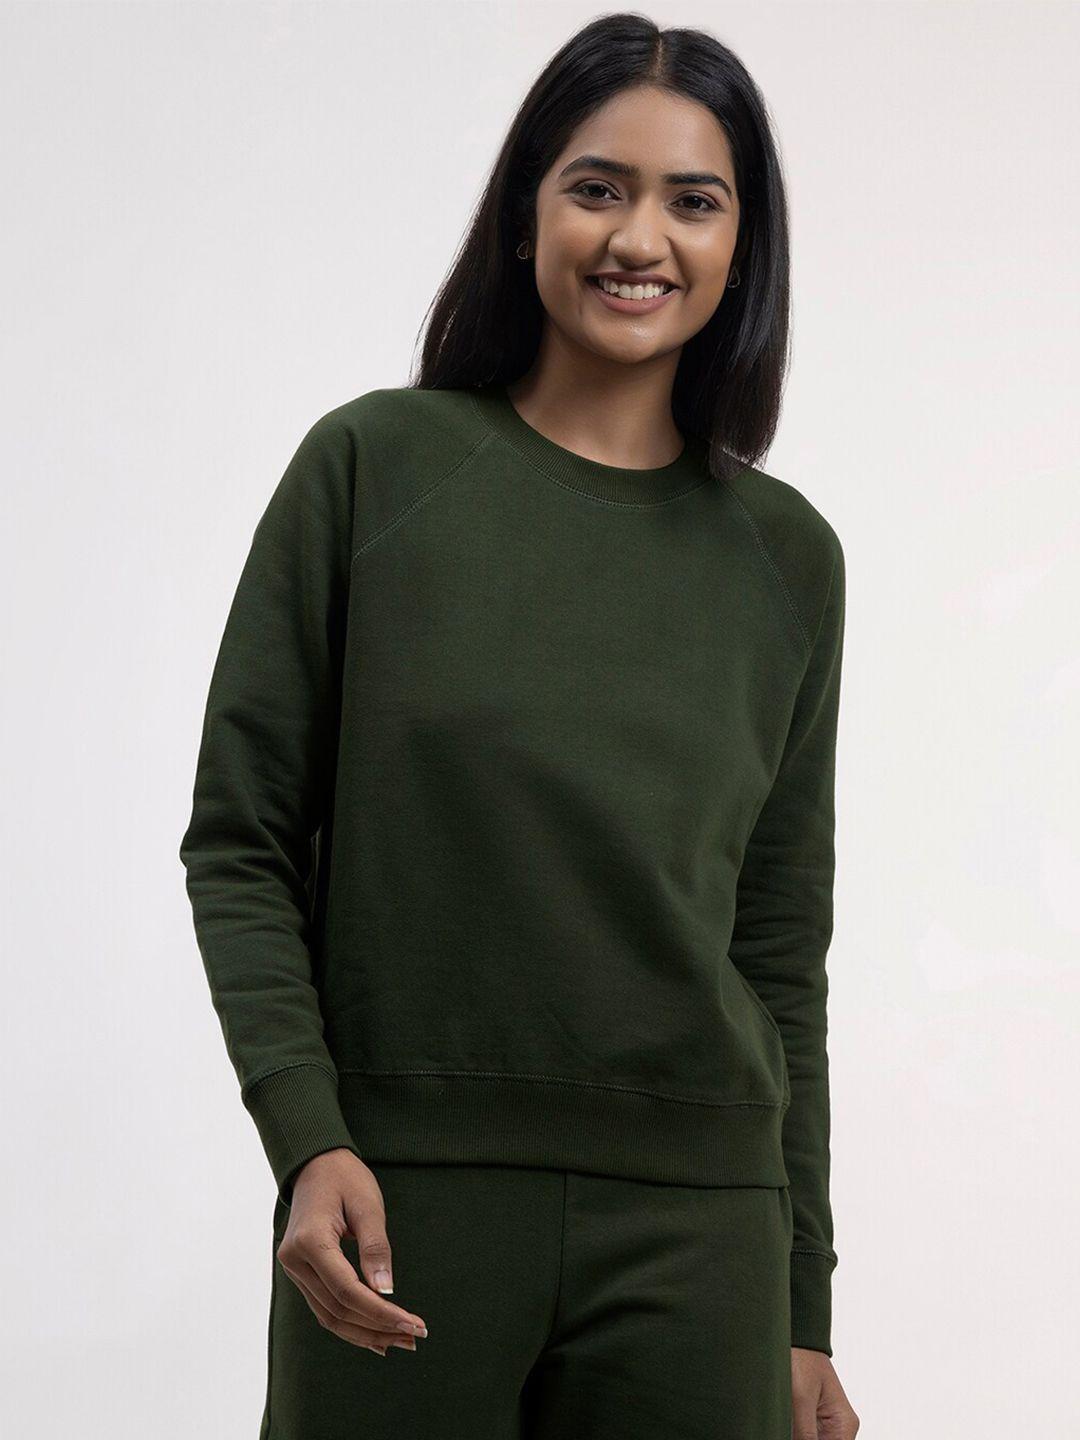 fablestreet women olive green solid cotton sweatshirt